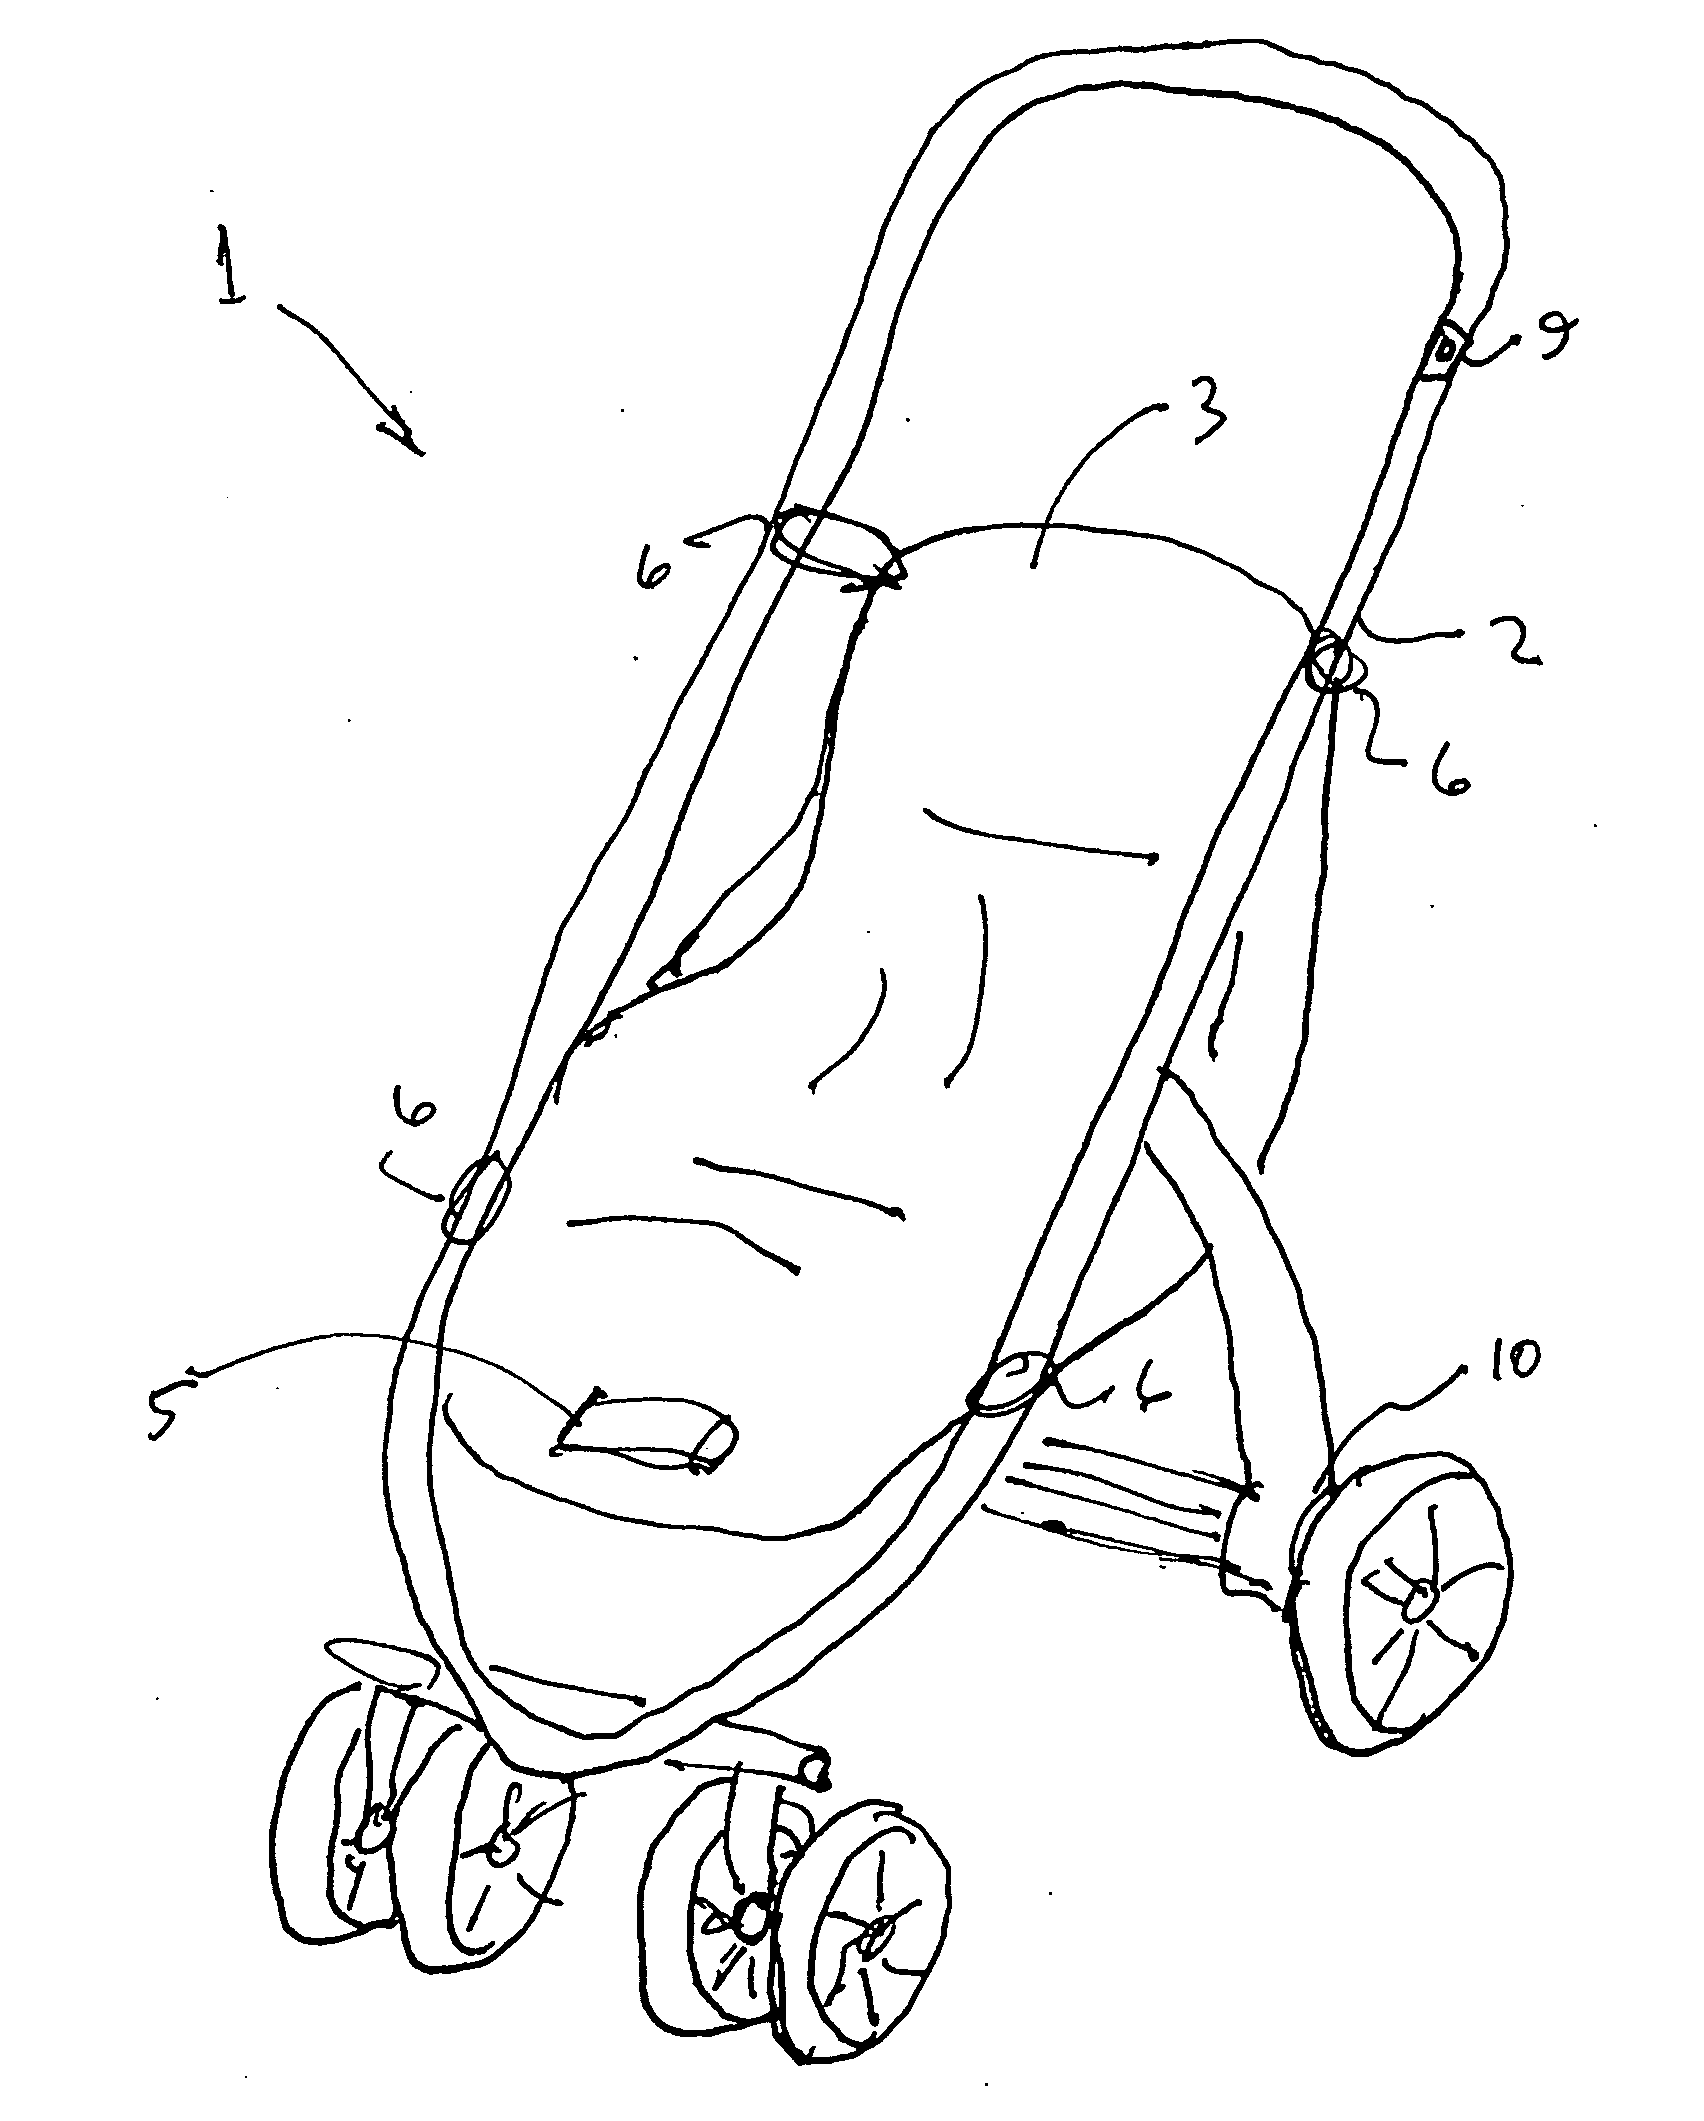 Infant stroller with vibration